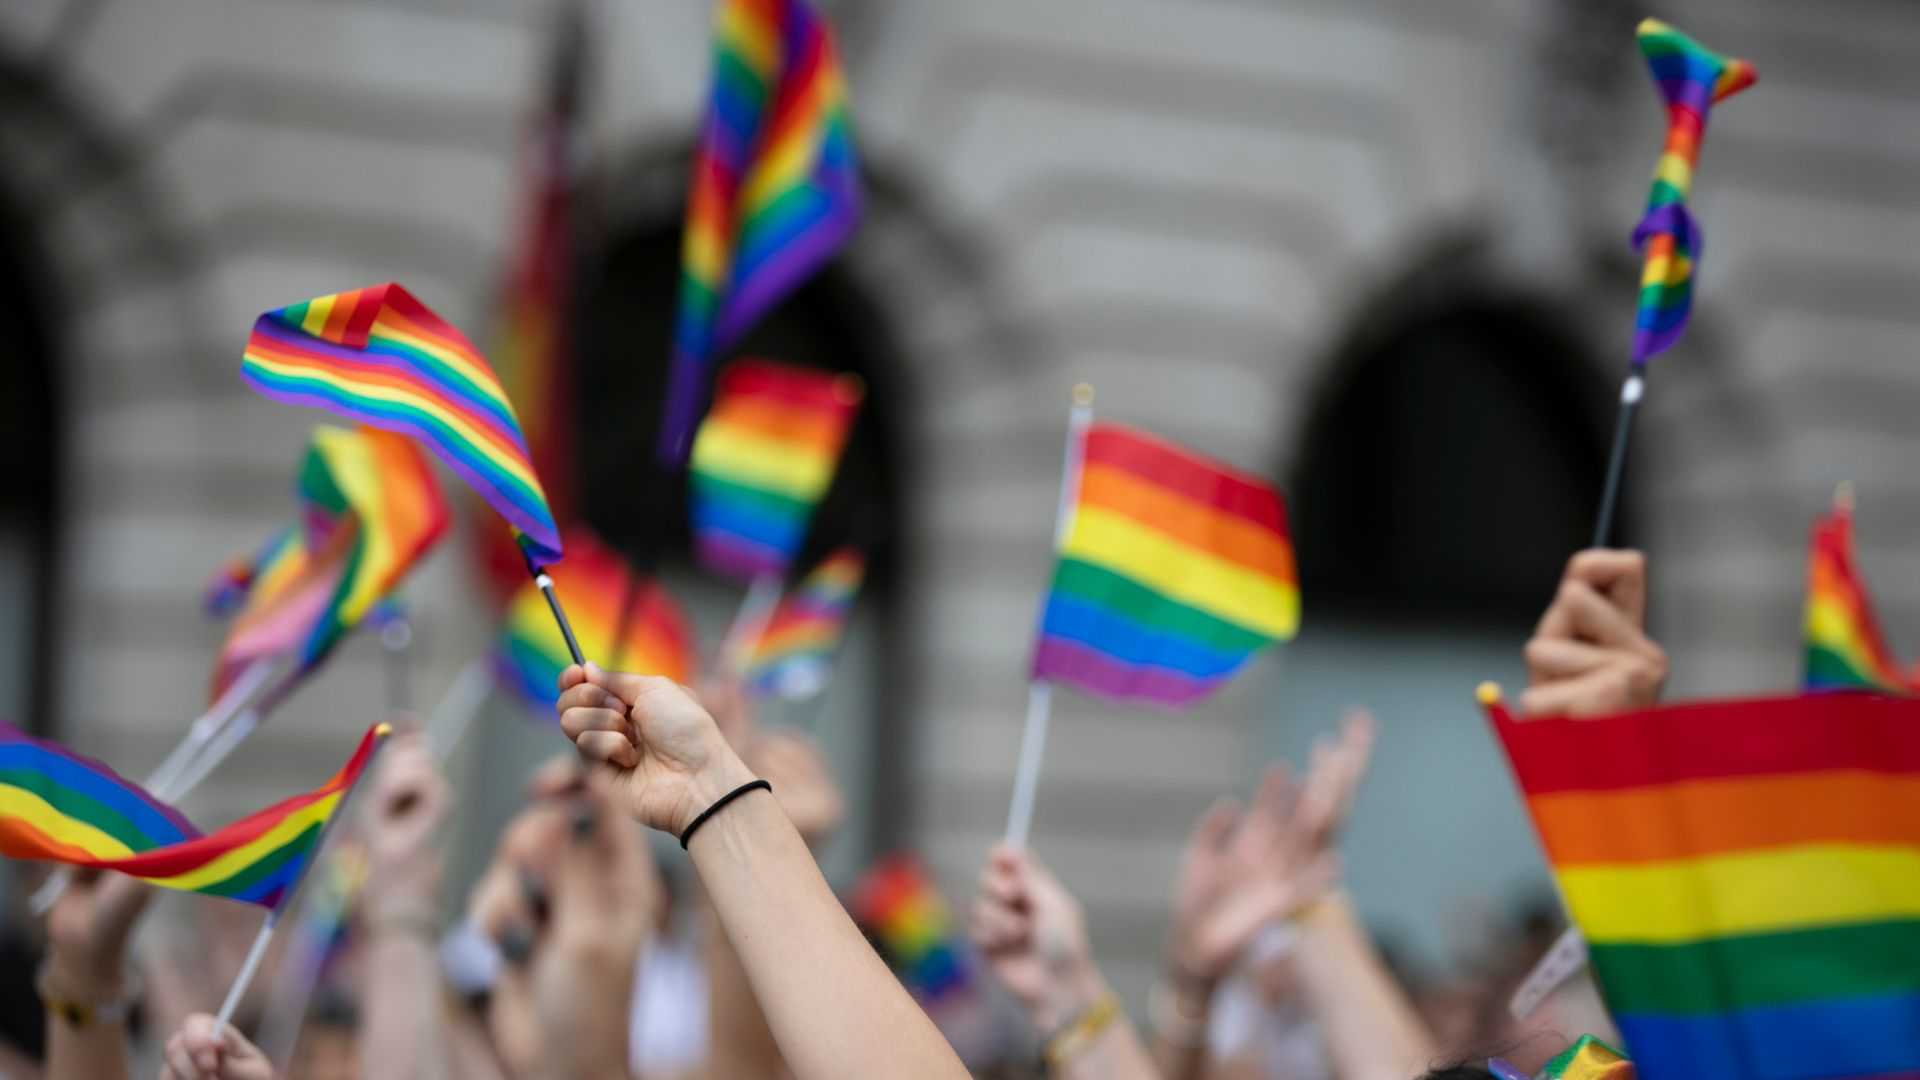 Greece legalizes same-sex marriage